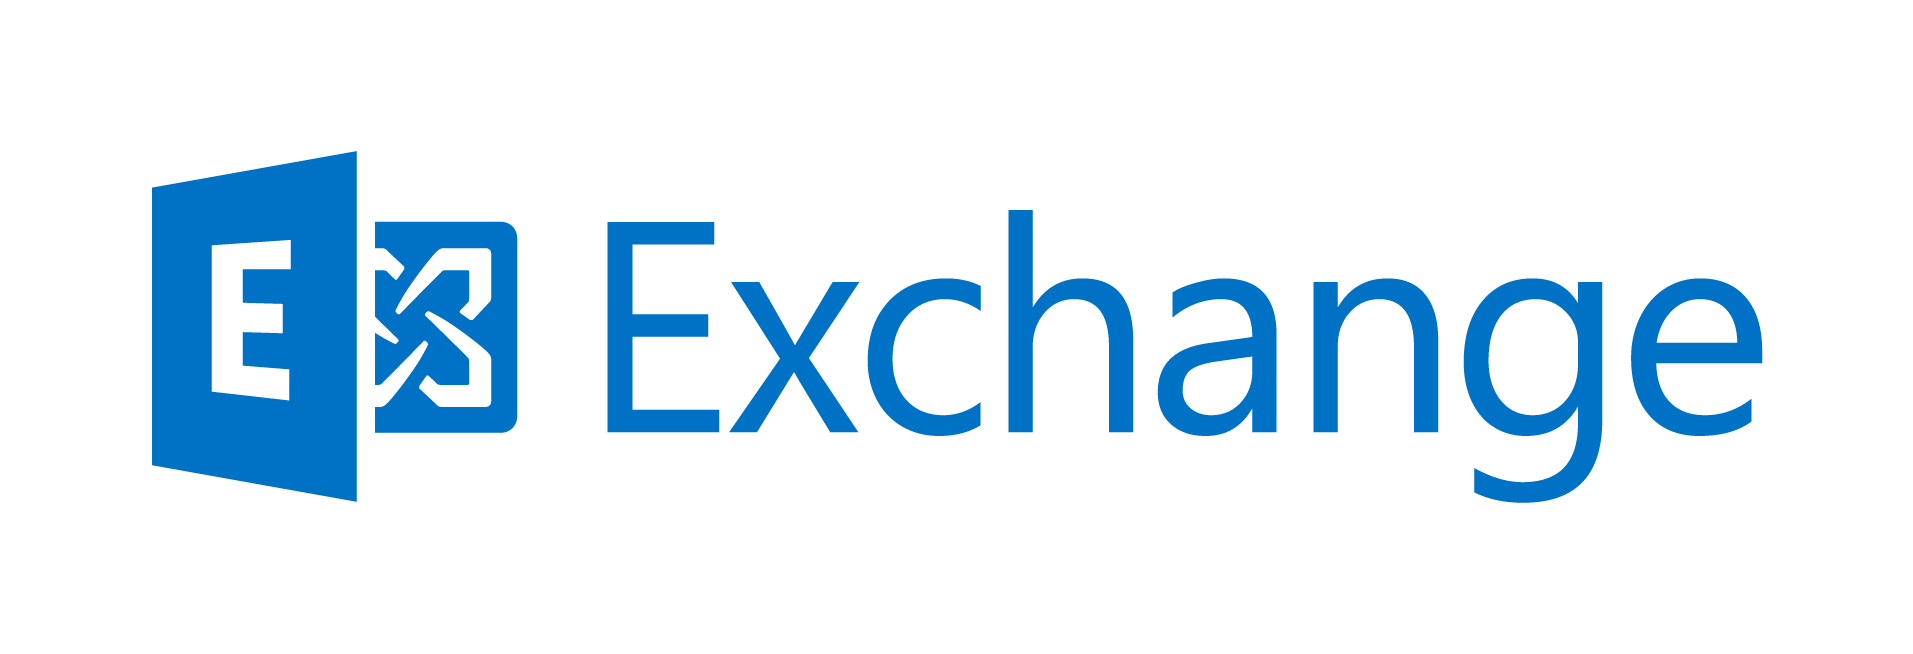 Microsoft Exchange Logotype